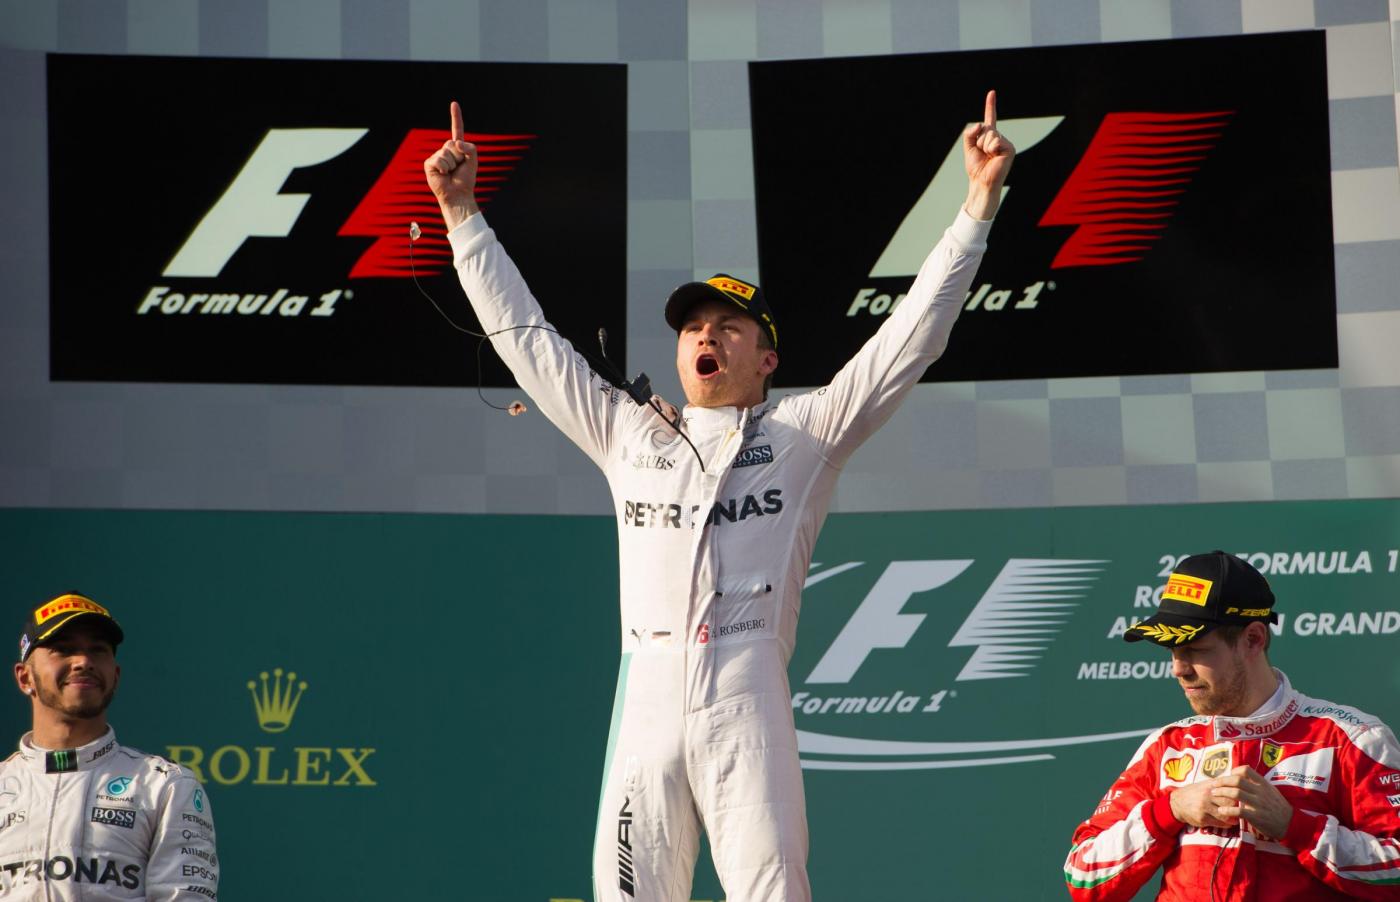 F1, Gp Australia: vince Rosberg davanti a Hamilton, terzo Vettel